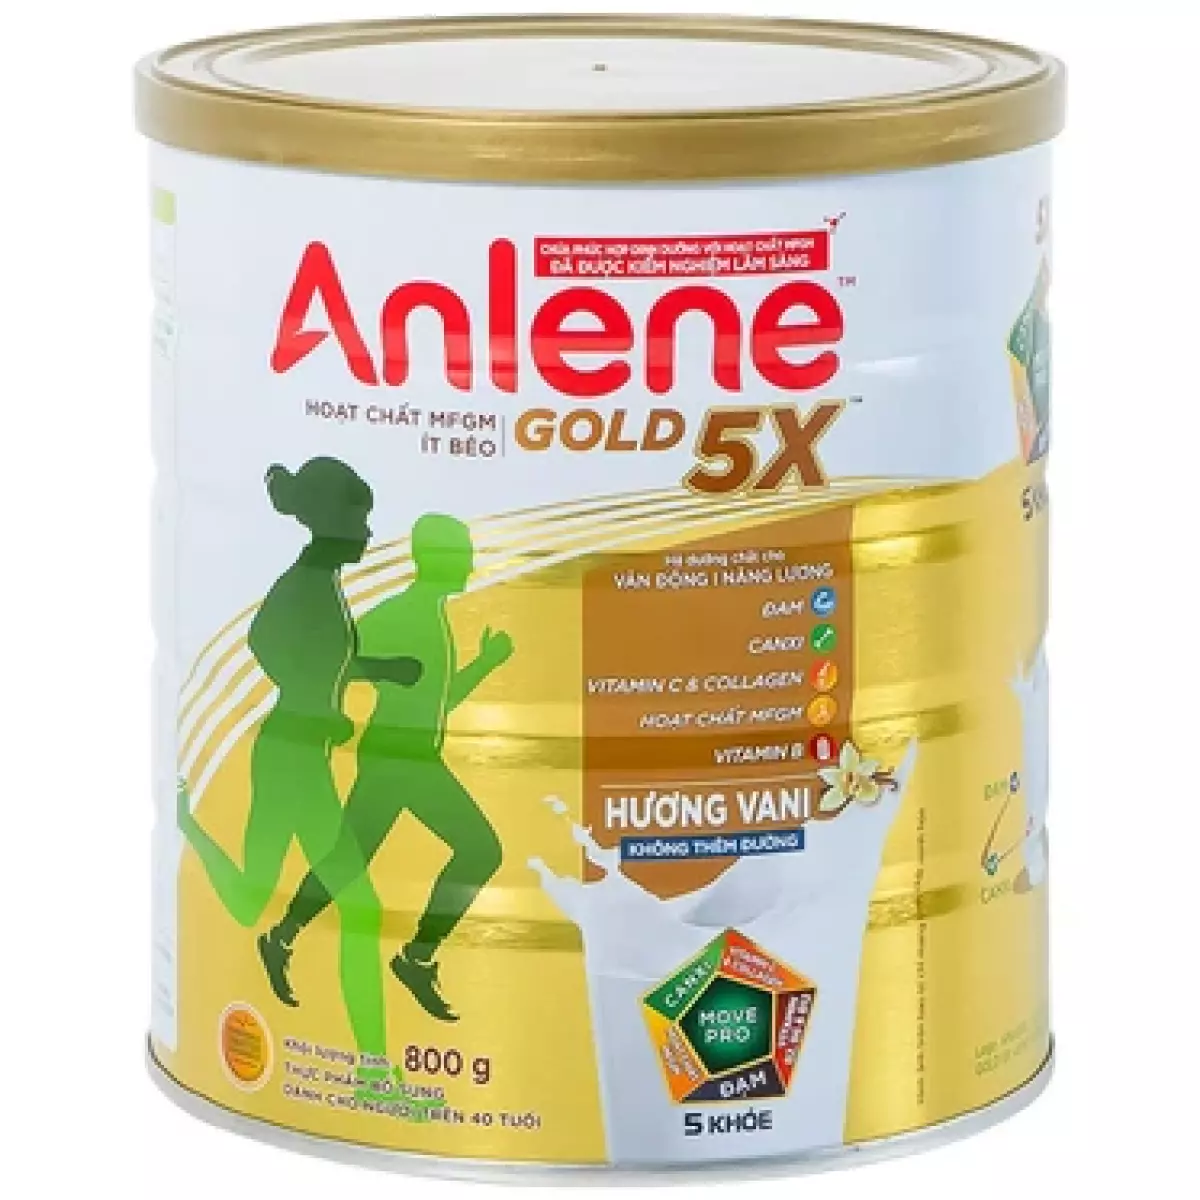 Sữa Anlene Gold 5X hương vani